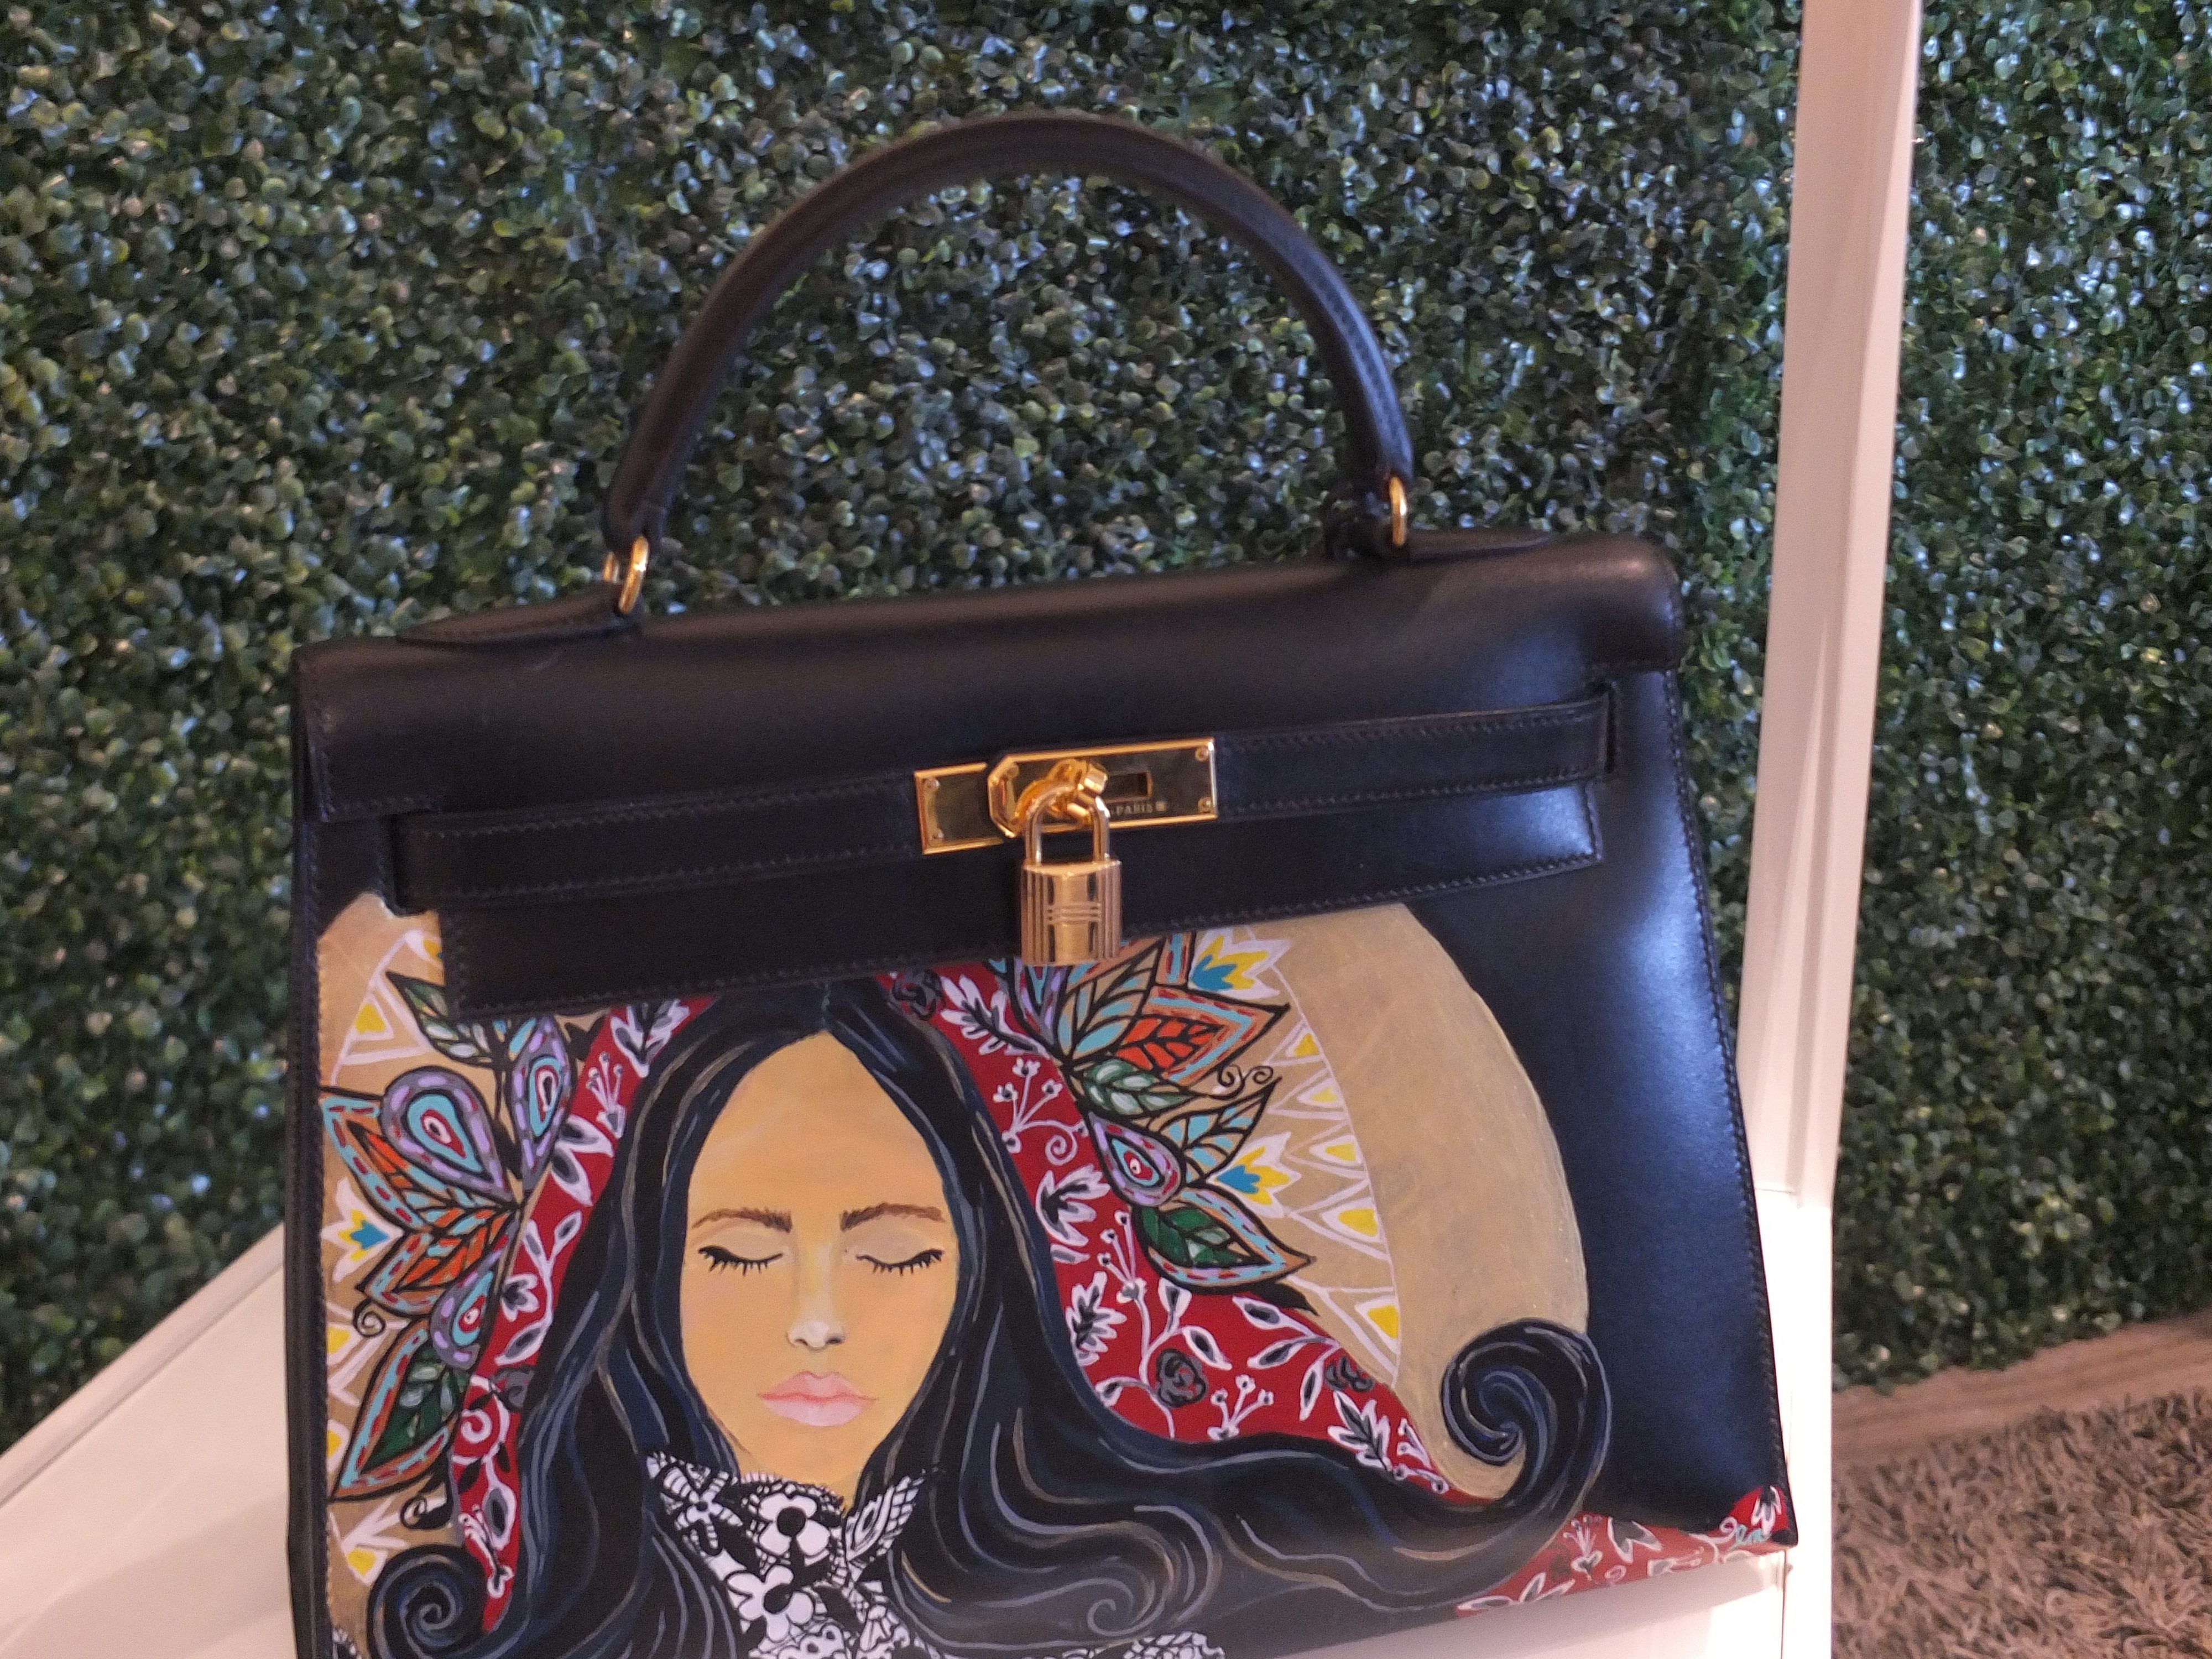 Heart Evangelista Shows How She Paints On Handbags